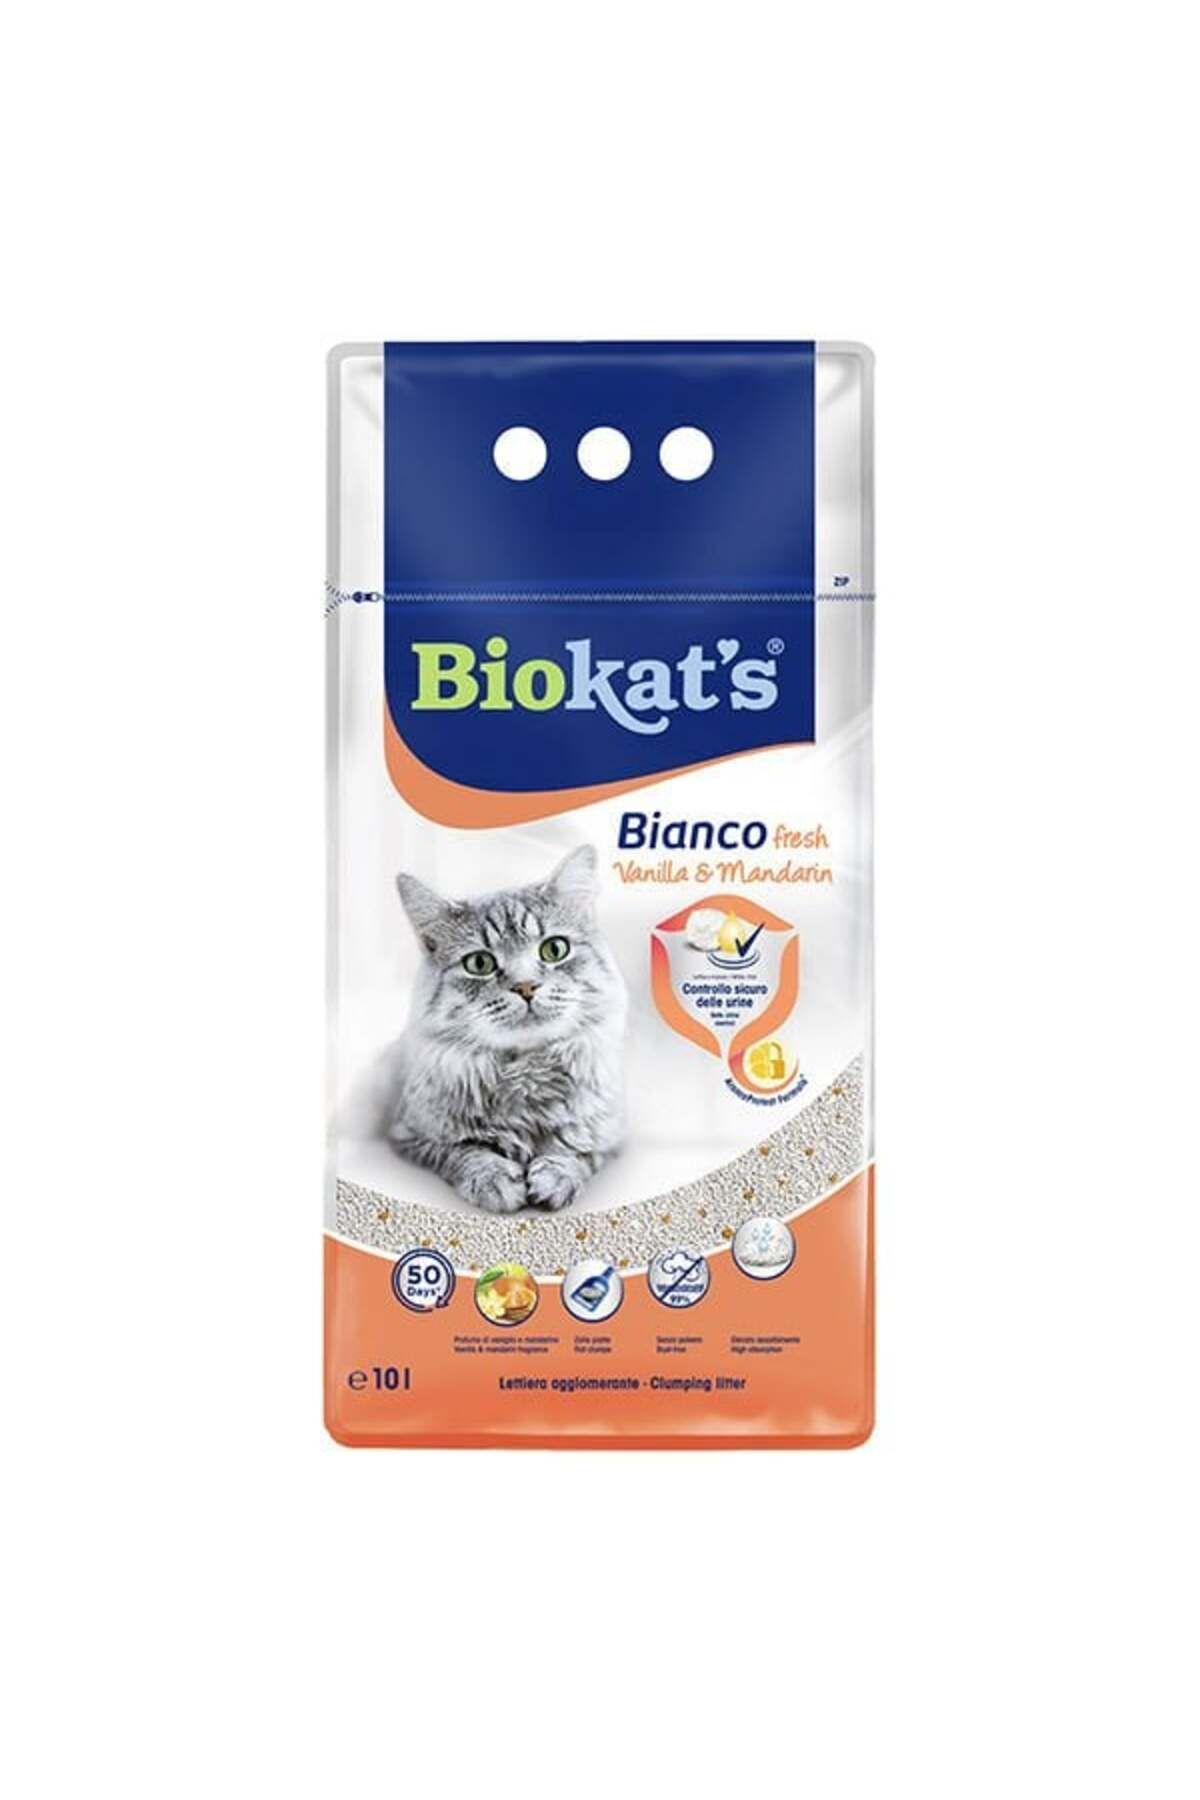 Biokat's Bianco Fresh Vanilya ve Mandalina Kokulu Topaklanan Doğal Kedi Kumu 10 Lt